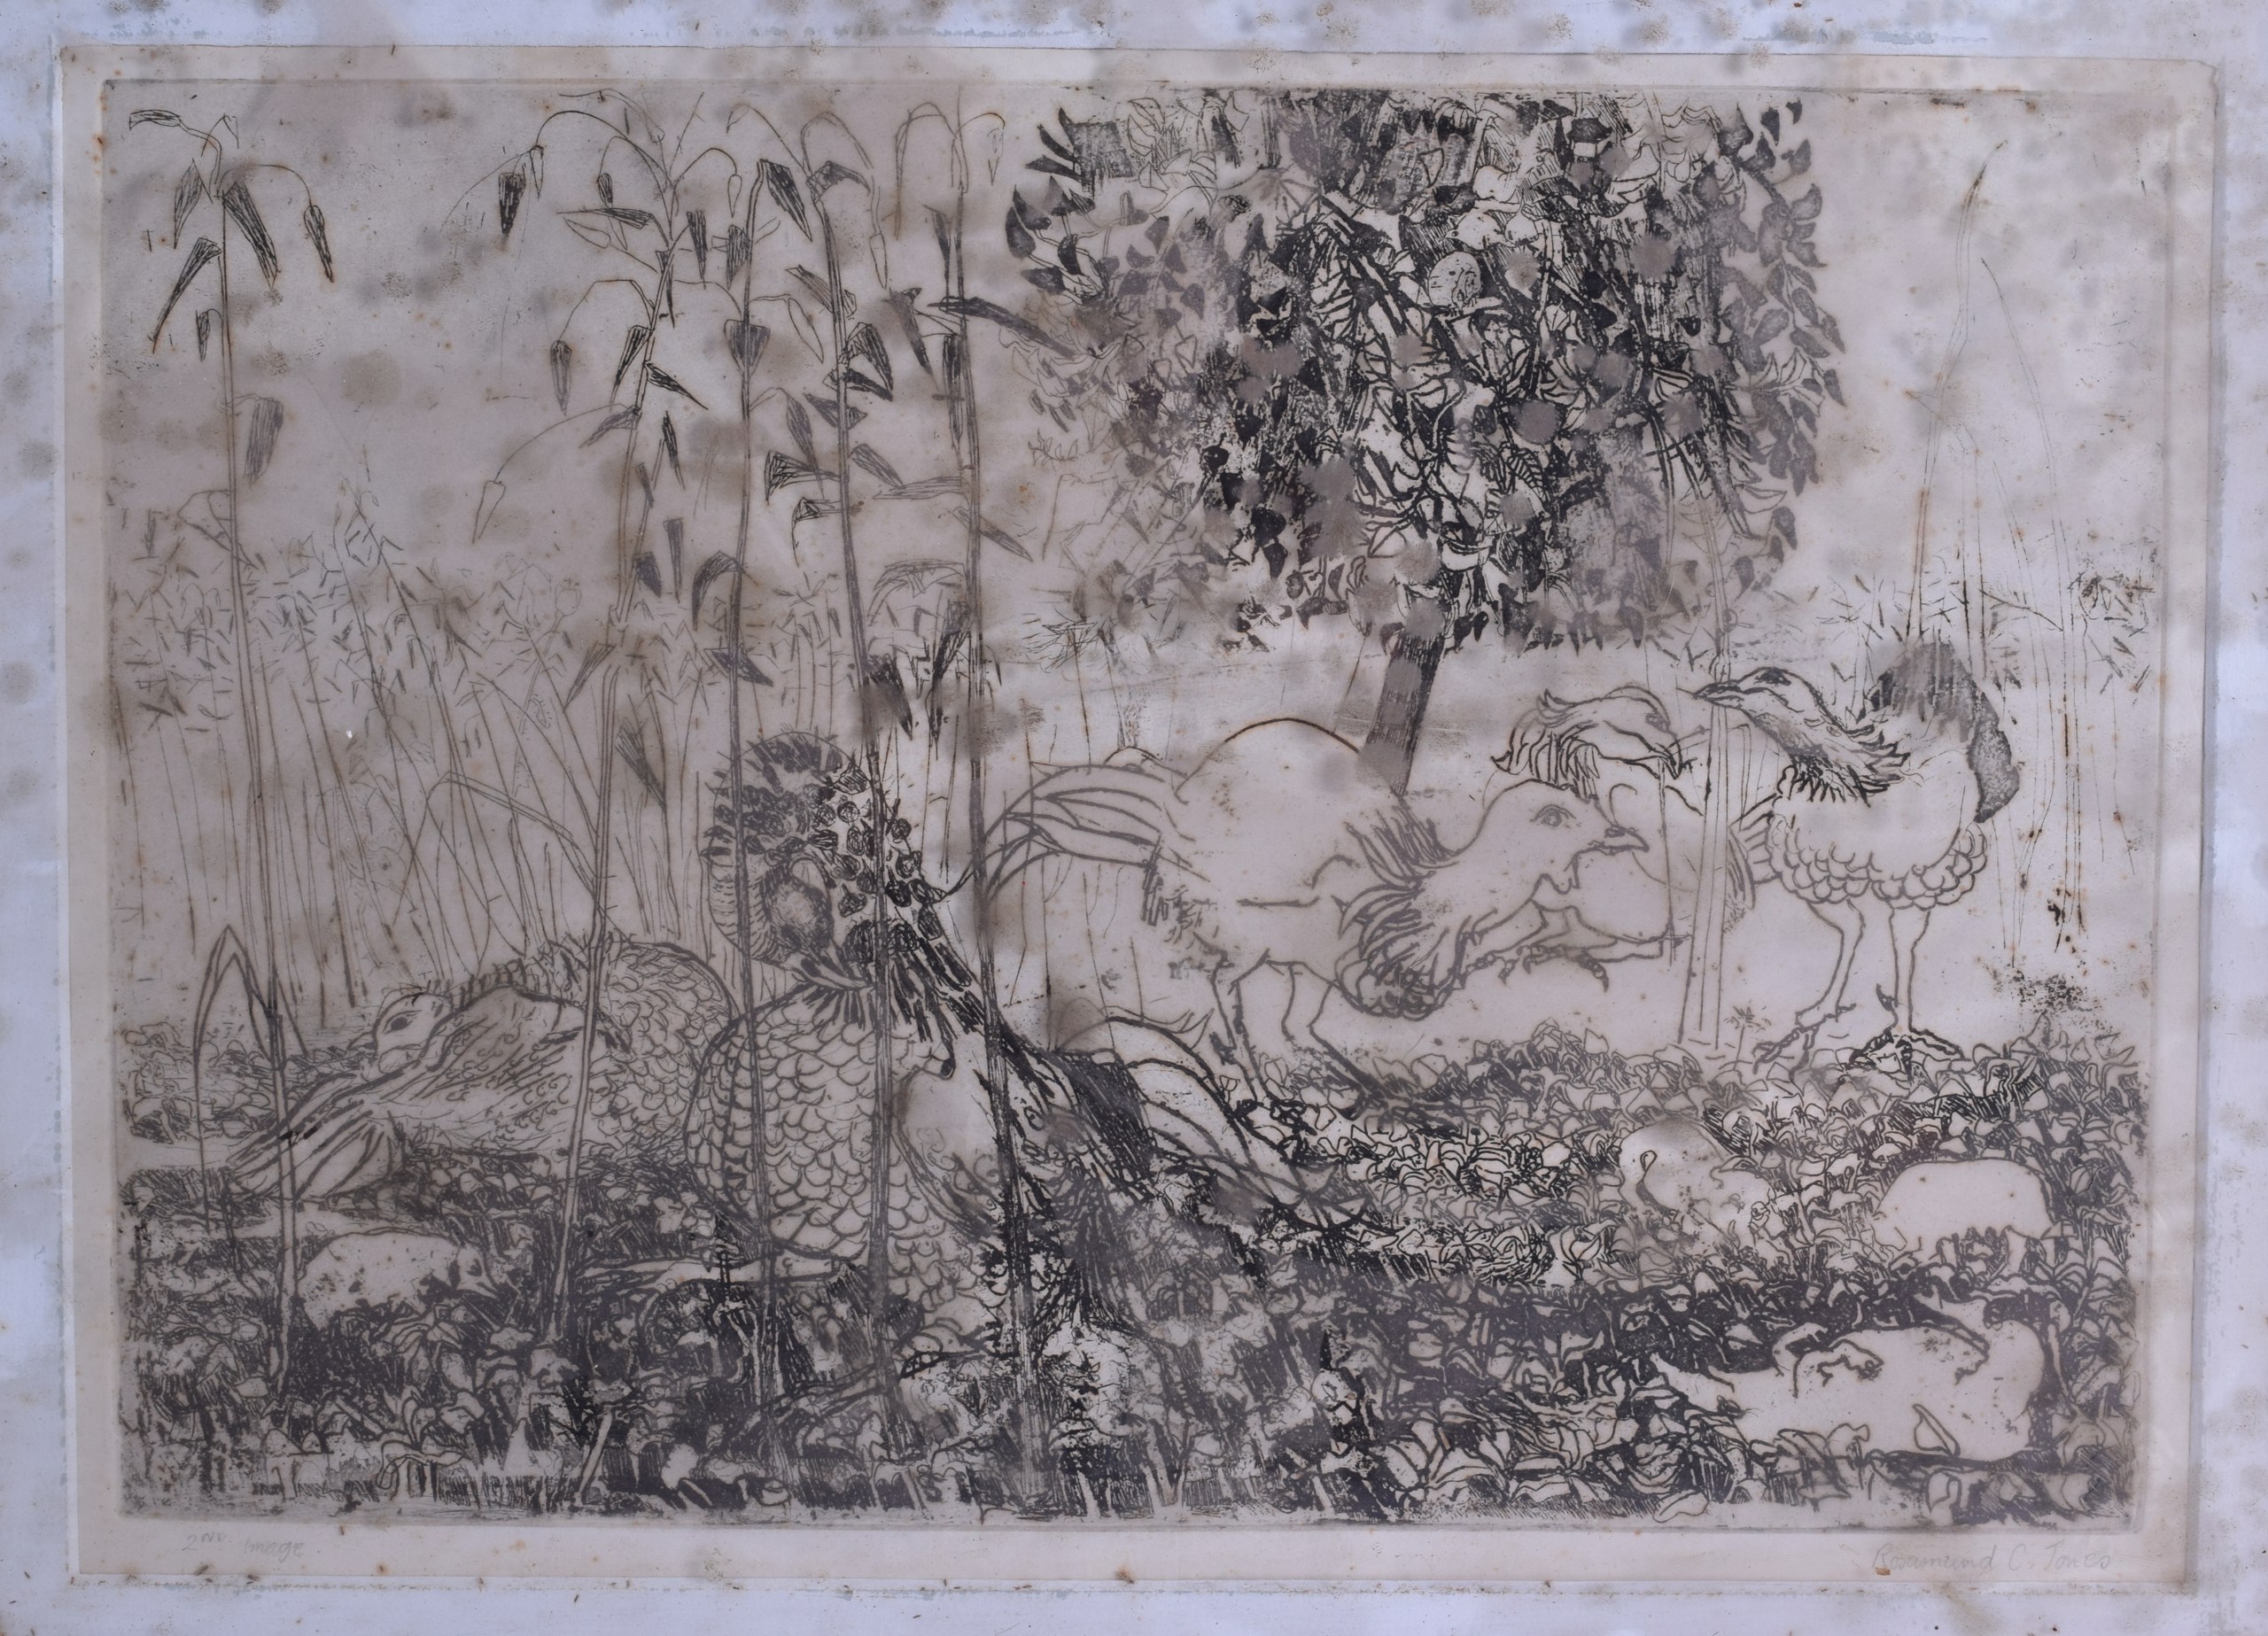 ROSMUND C JONES (British), Framed Engraving, "2nd image", "Bantams in Field". 24 cm x 33 cm.